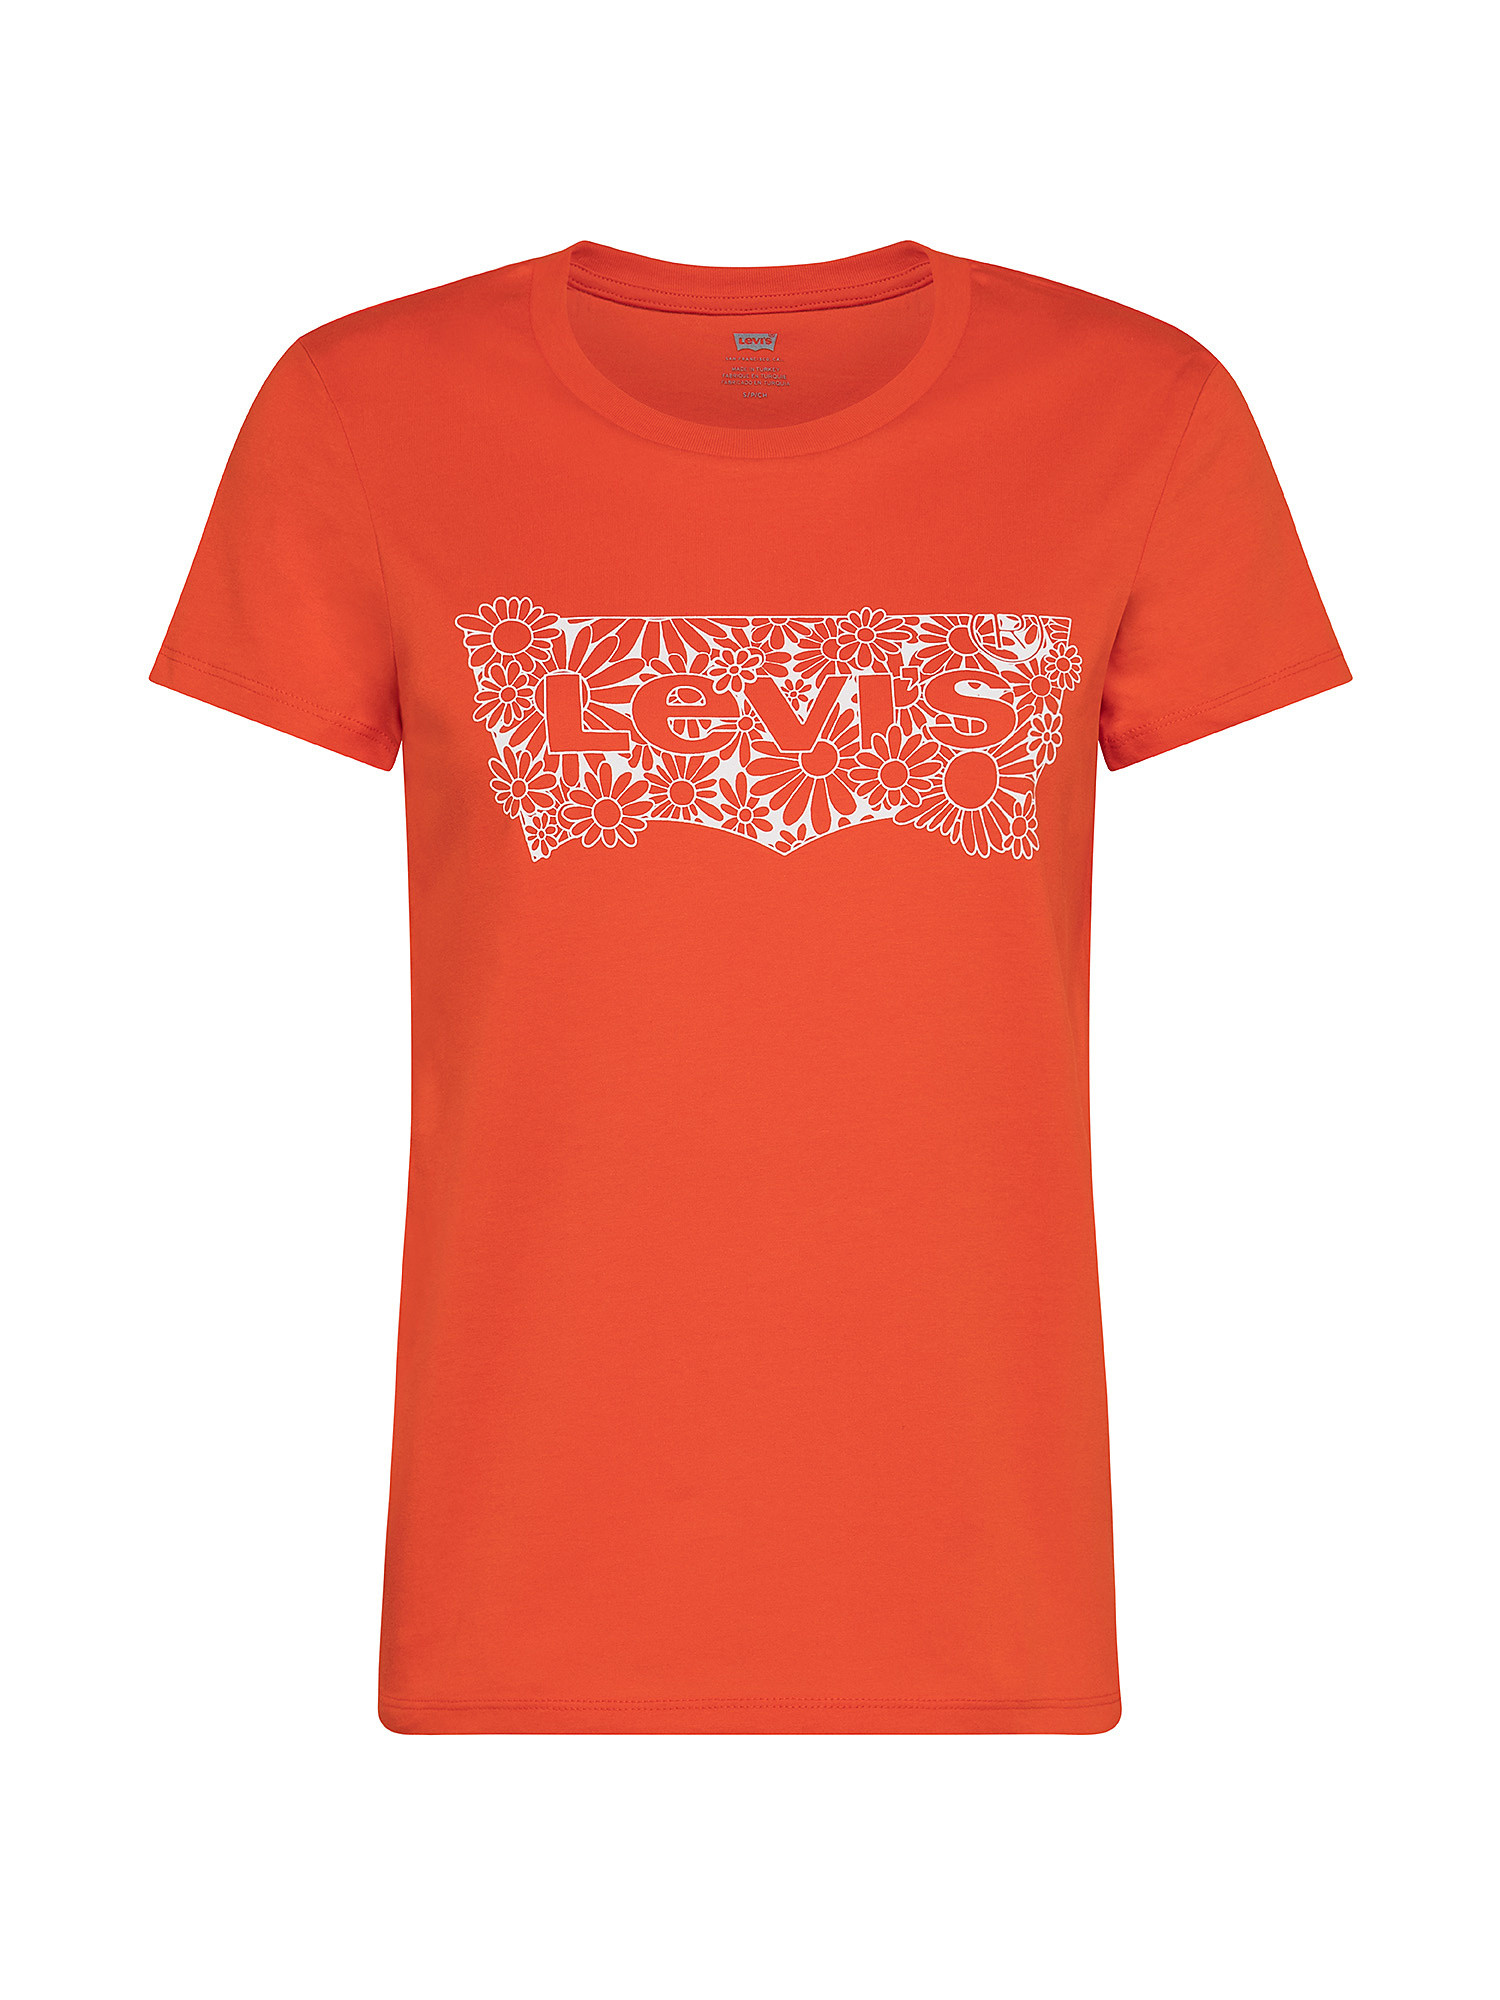 T-shirt Perfect Tee con logo, Arancione, large